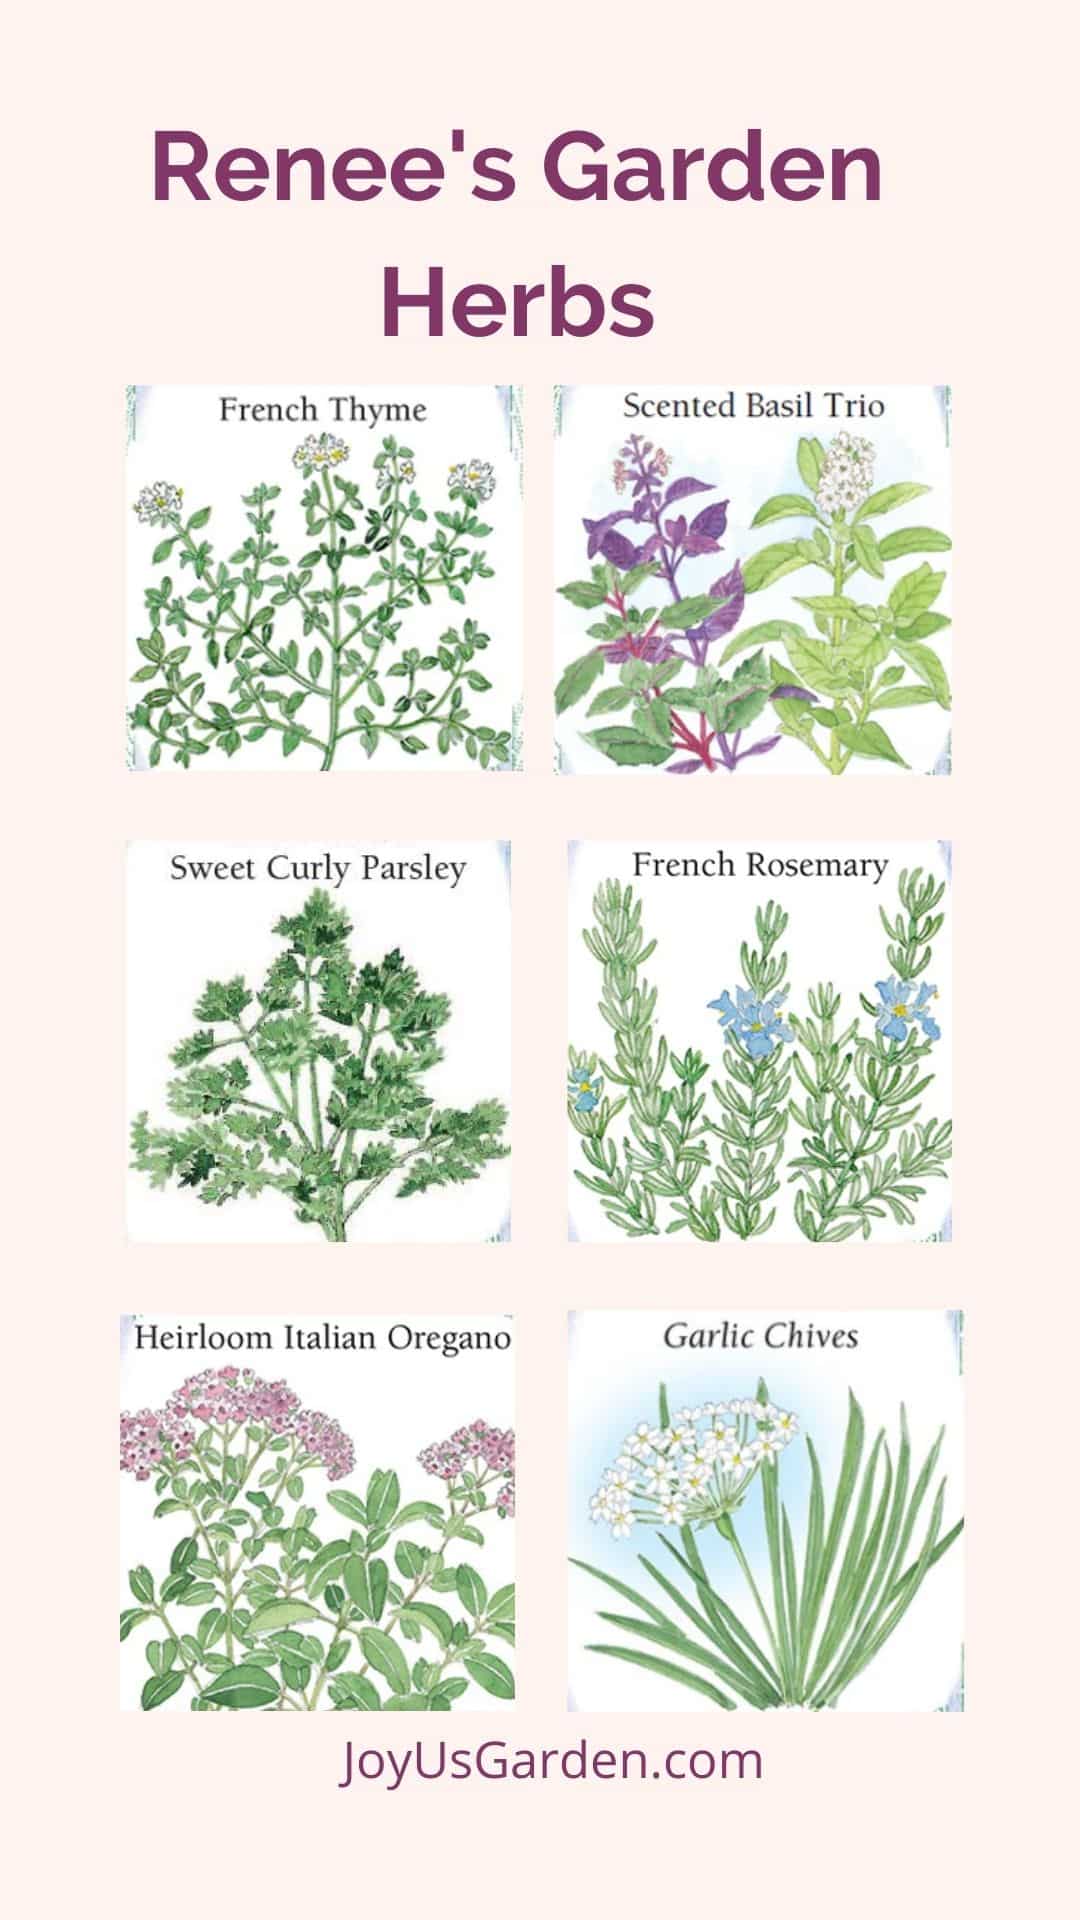 Collage of renee's gardens herbs.